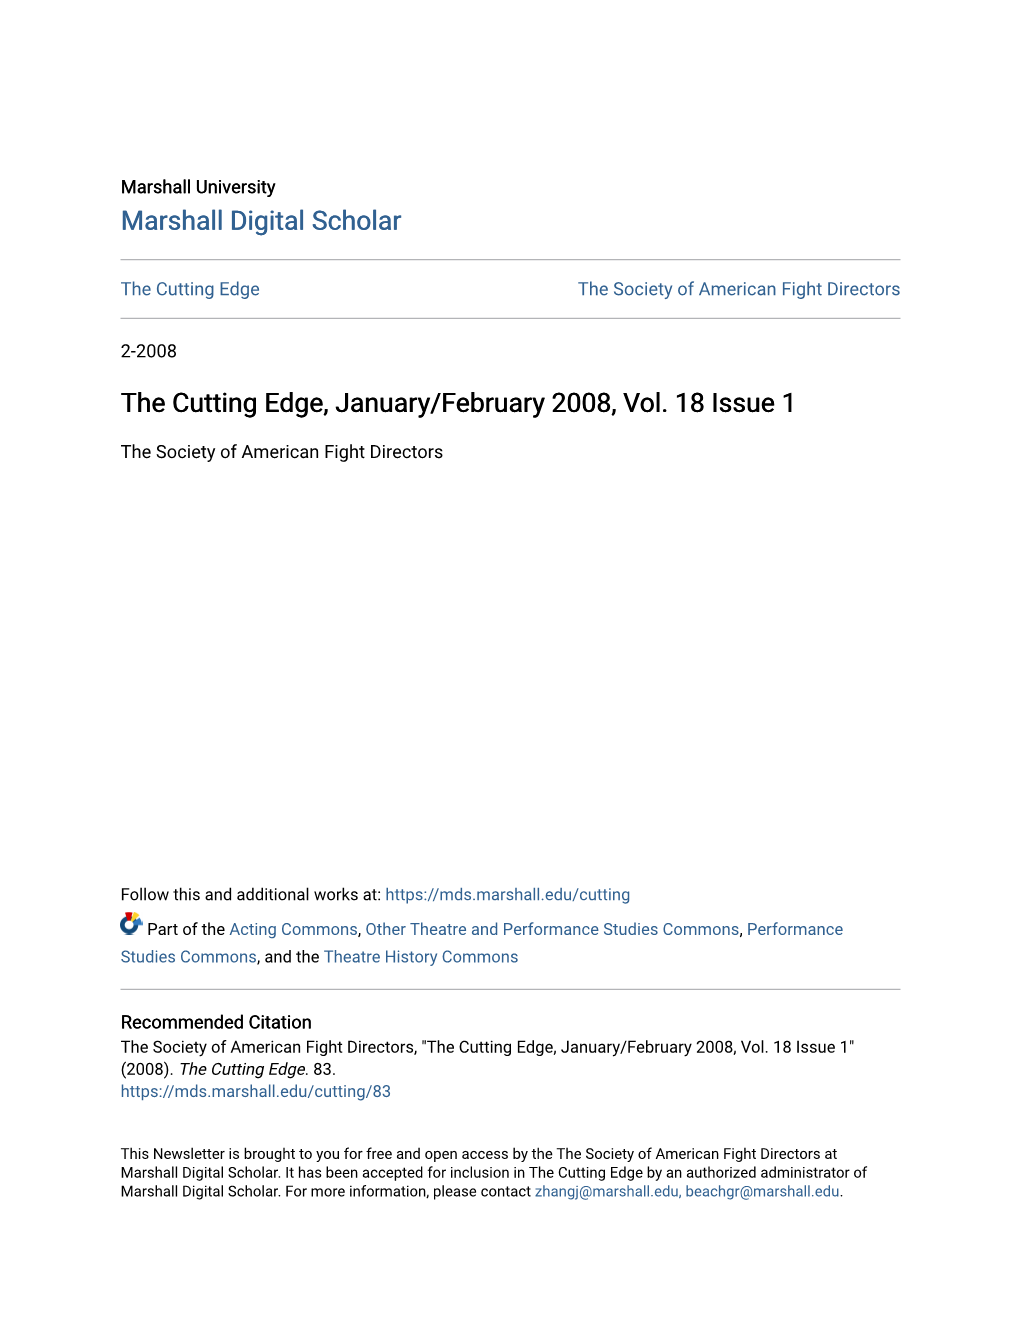 The Cutting Edge, January/February 2008, Vol. 18 Issue 1